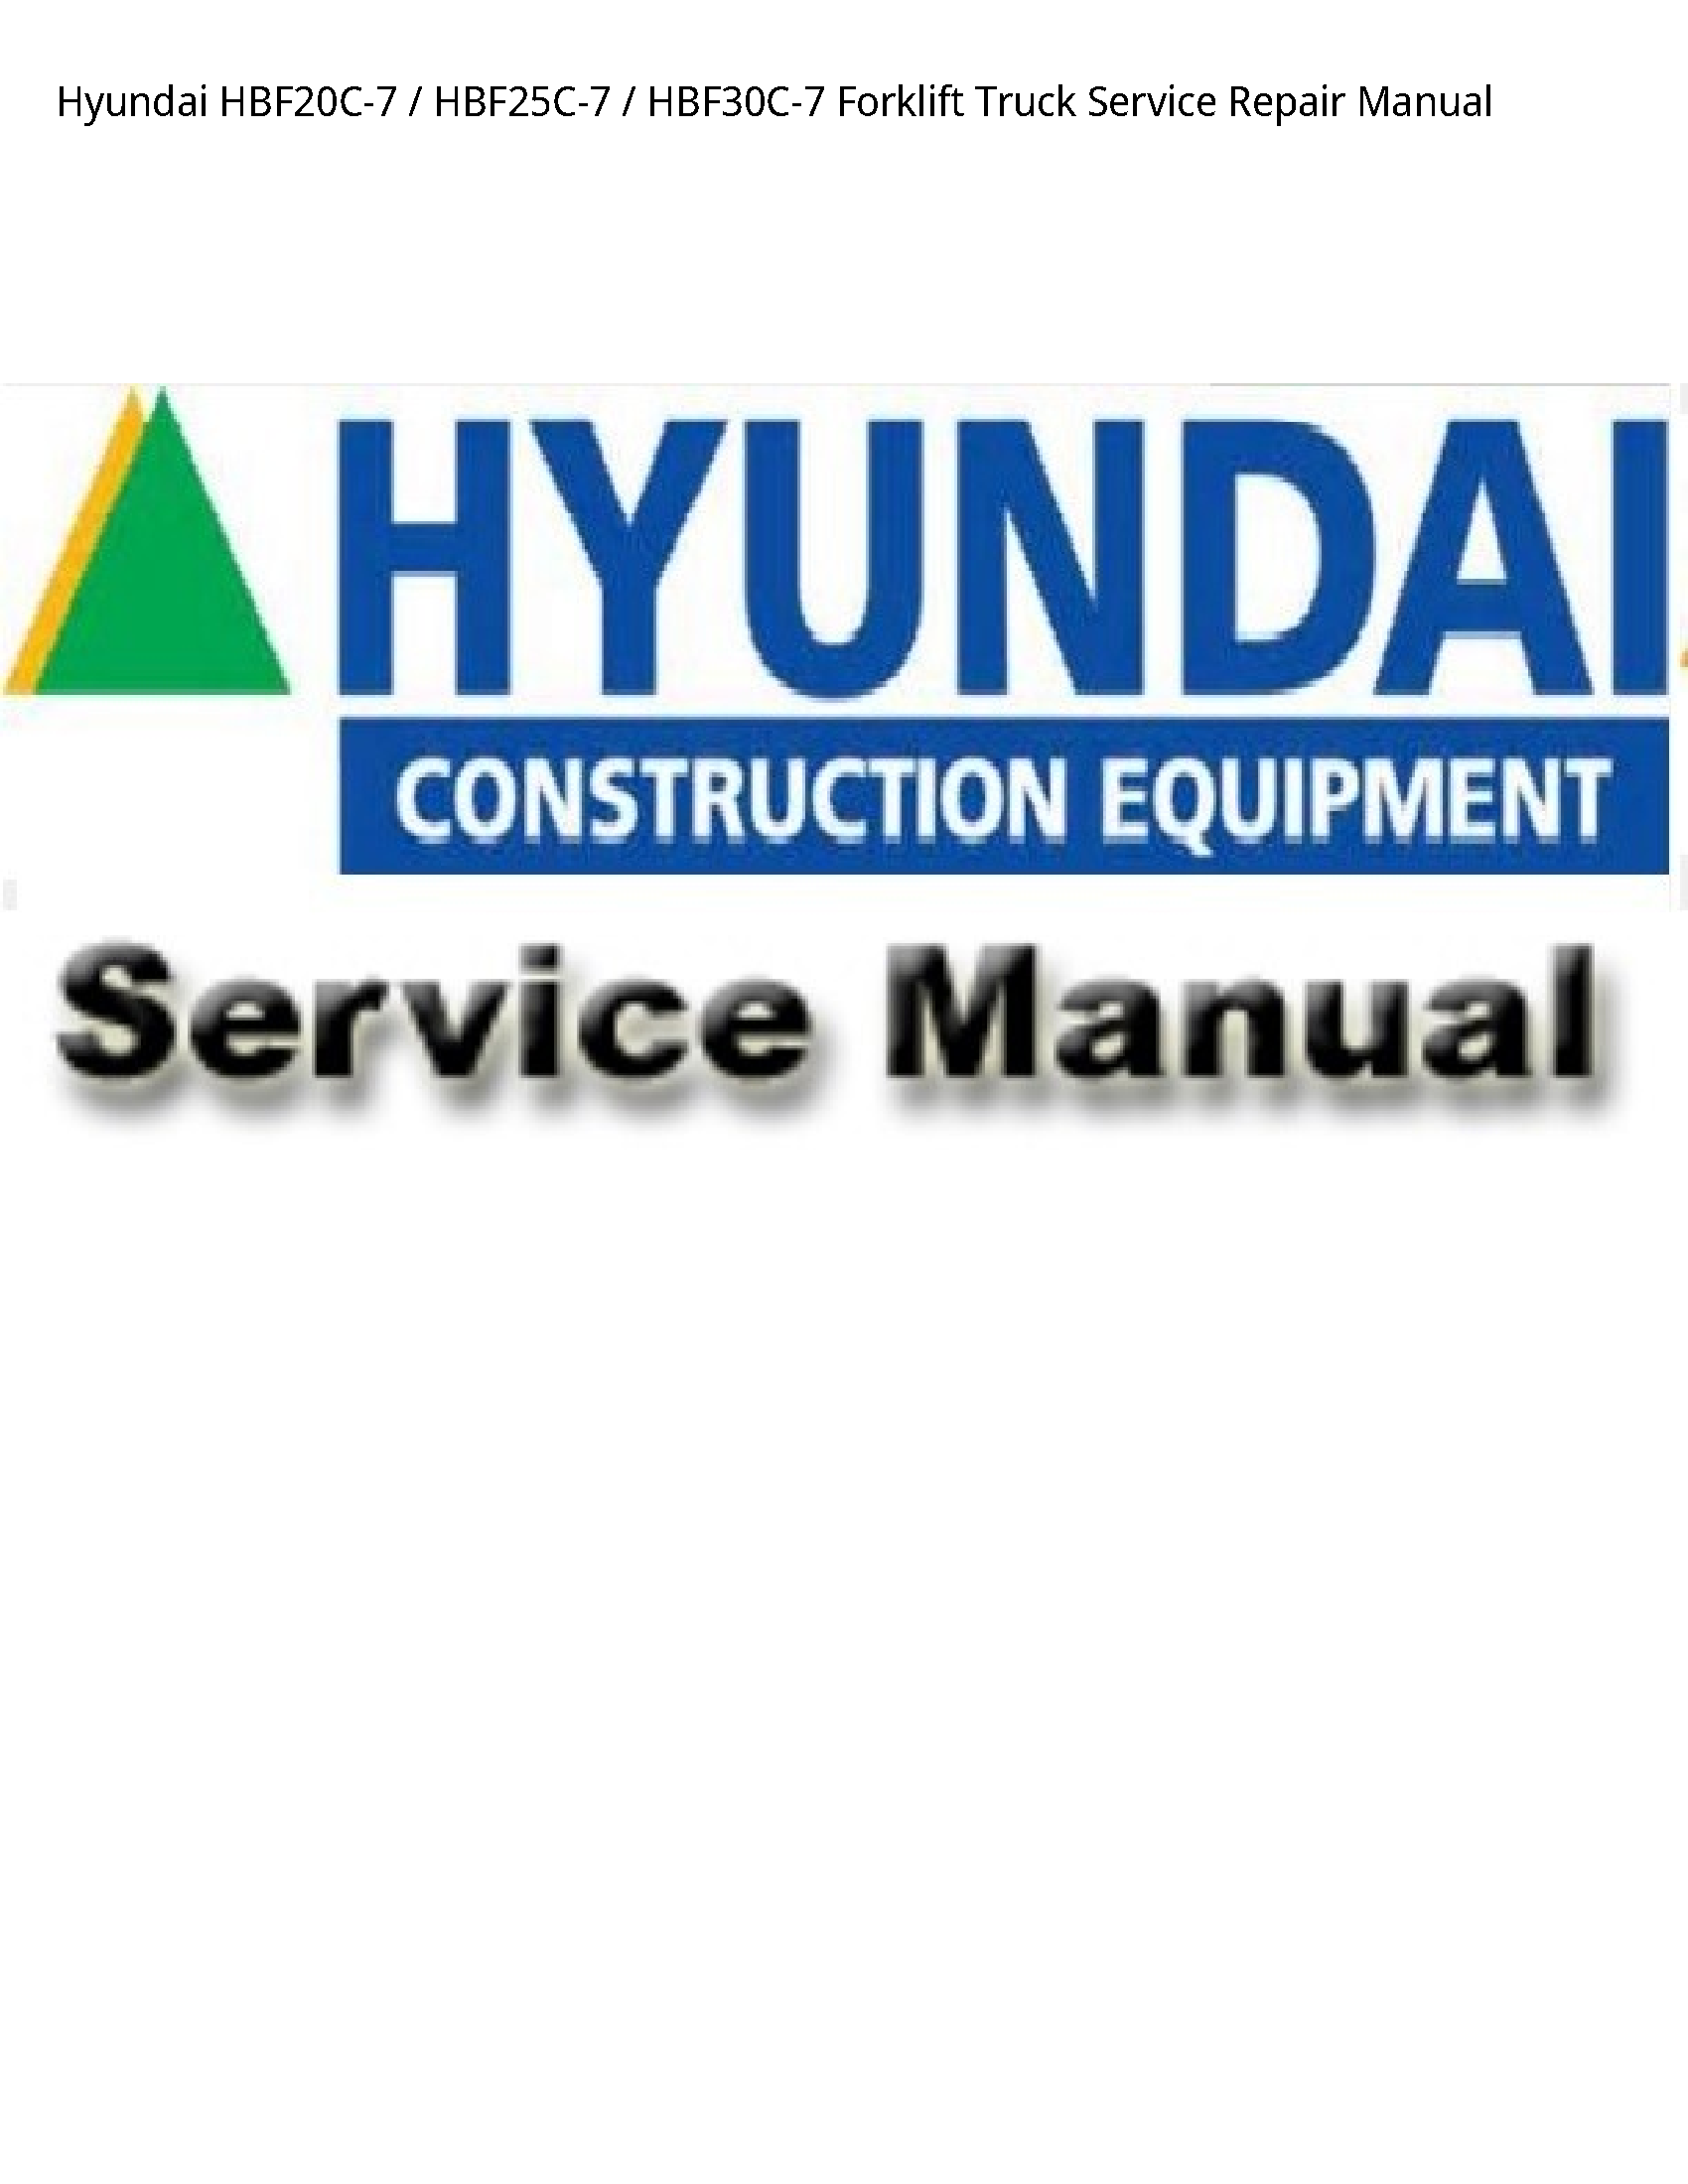 Hyundai HBF20C-7 Forklift Truck manual